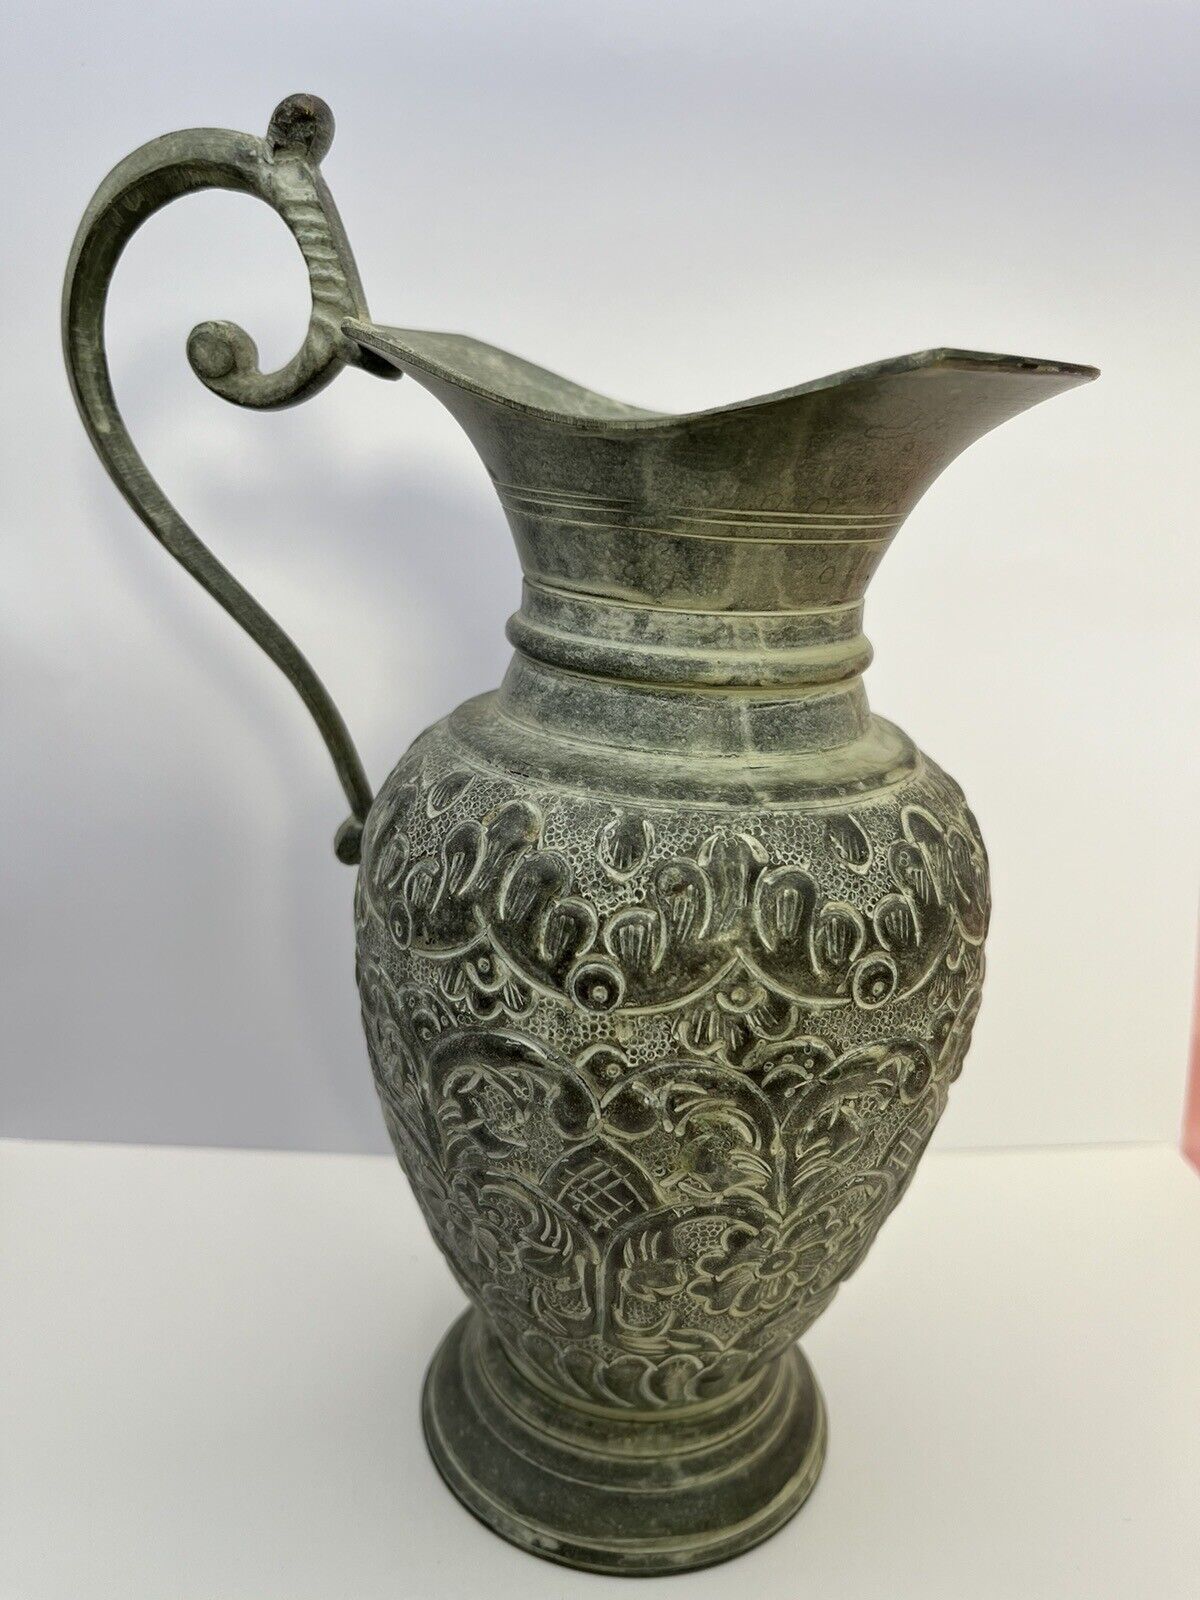 Gorgeous Metal Pitcher/Vase